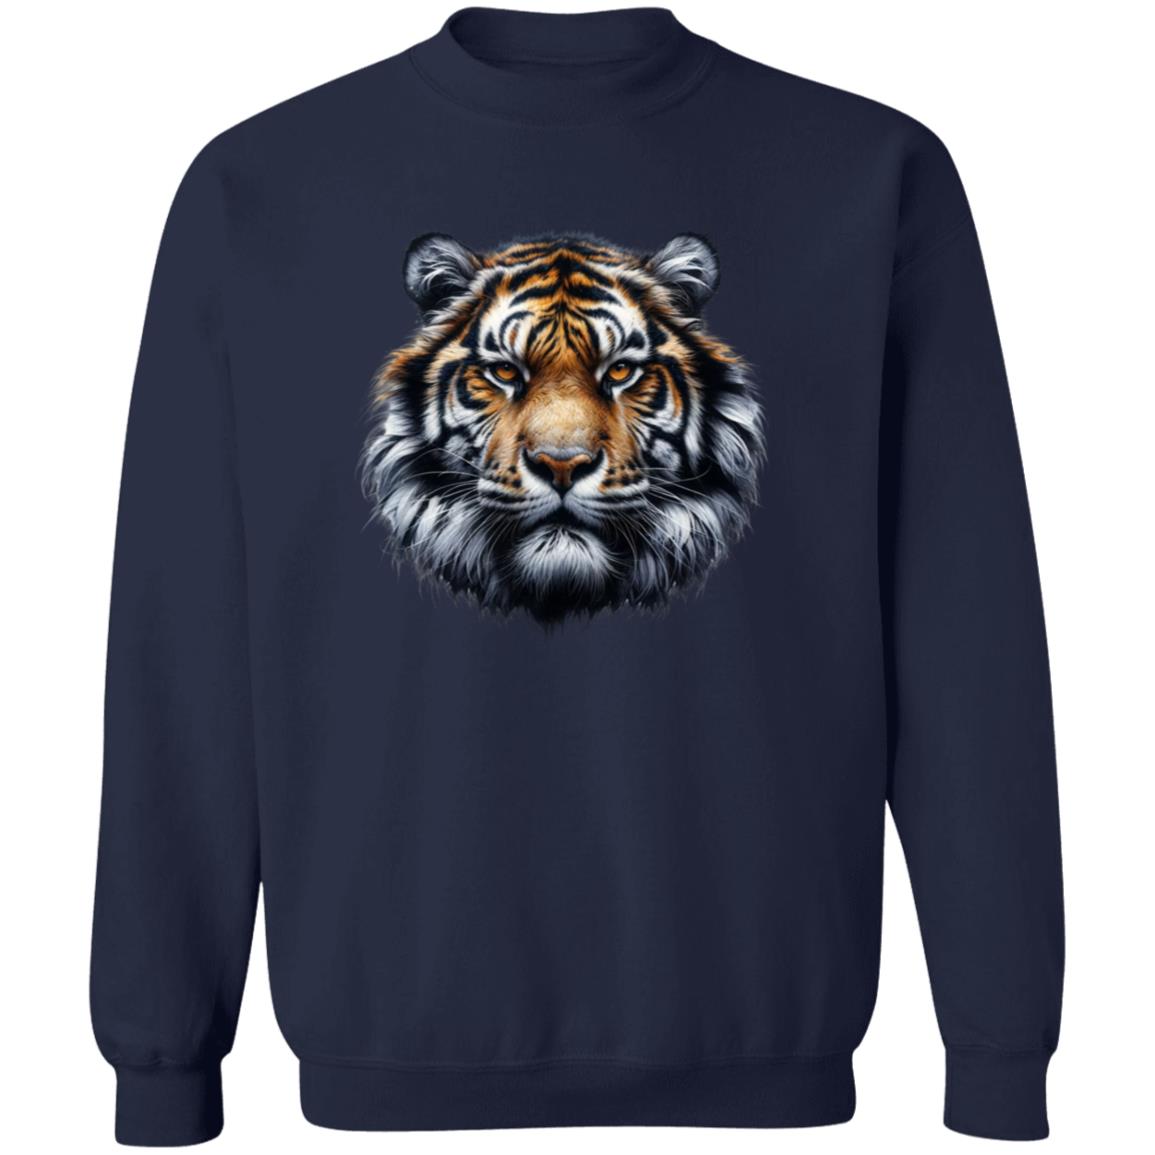 Strong Spirit Tiger Unisex Sweatshirt Black Navy Dark Heather-Family-Gift-Planet